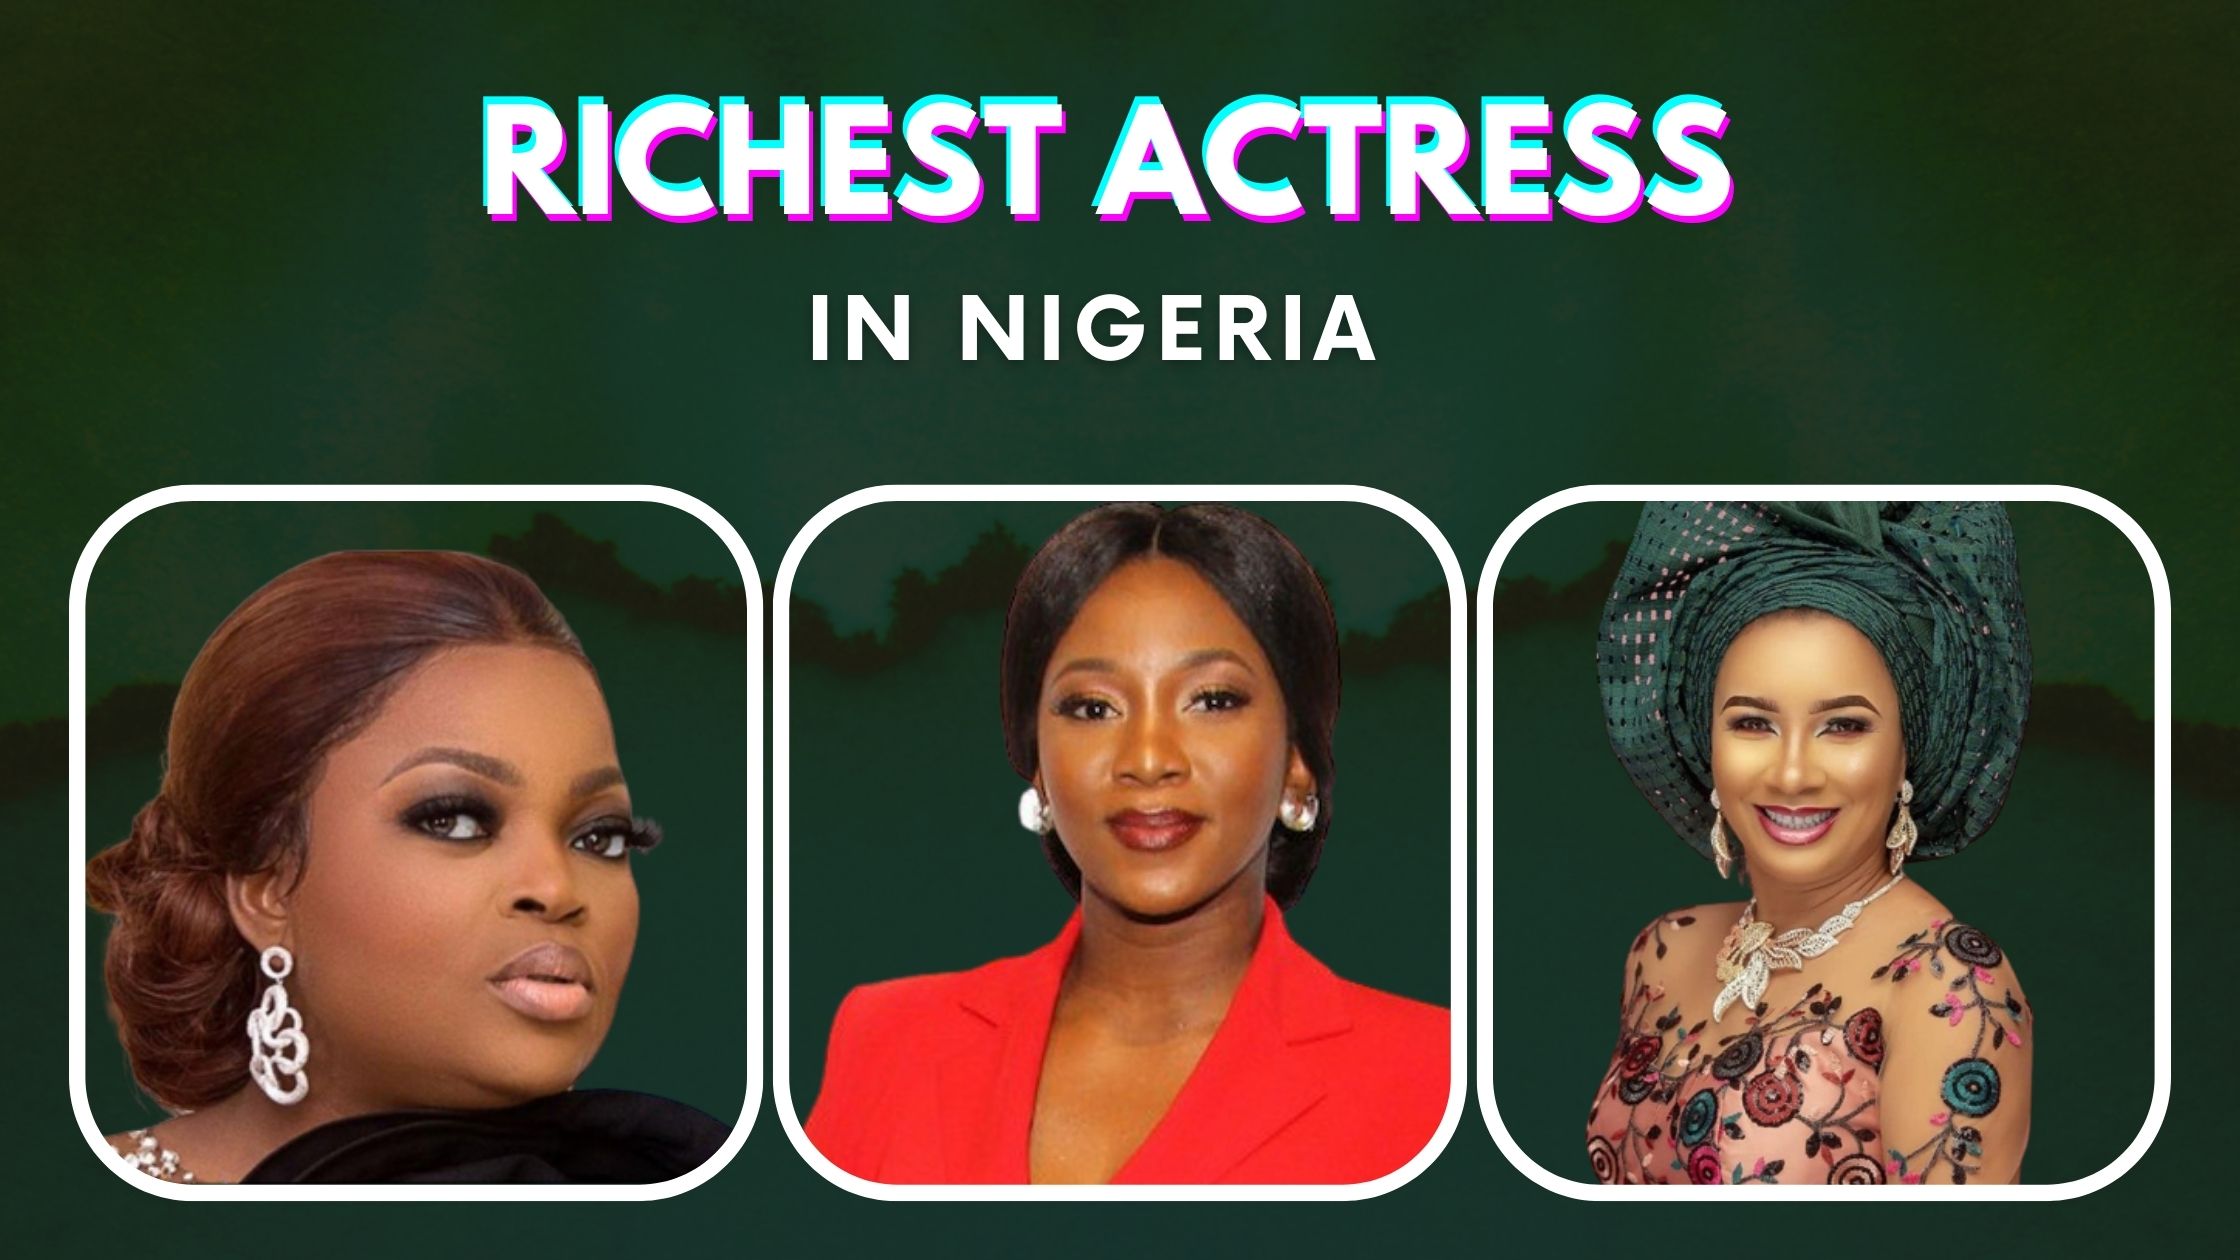 Top 10 Richest Actresses In Nigeria (2022)